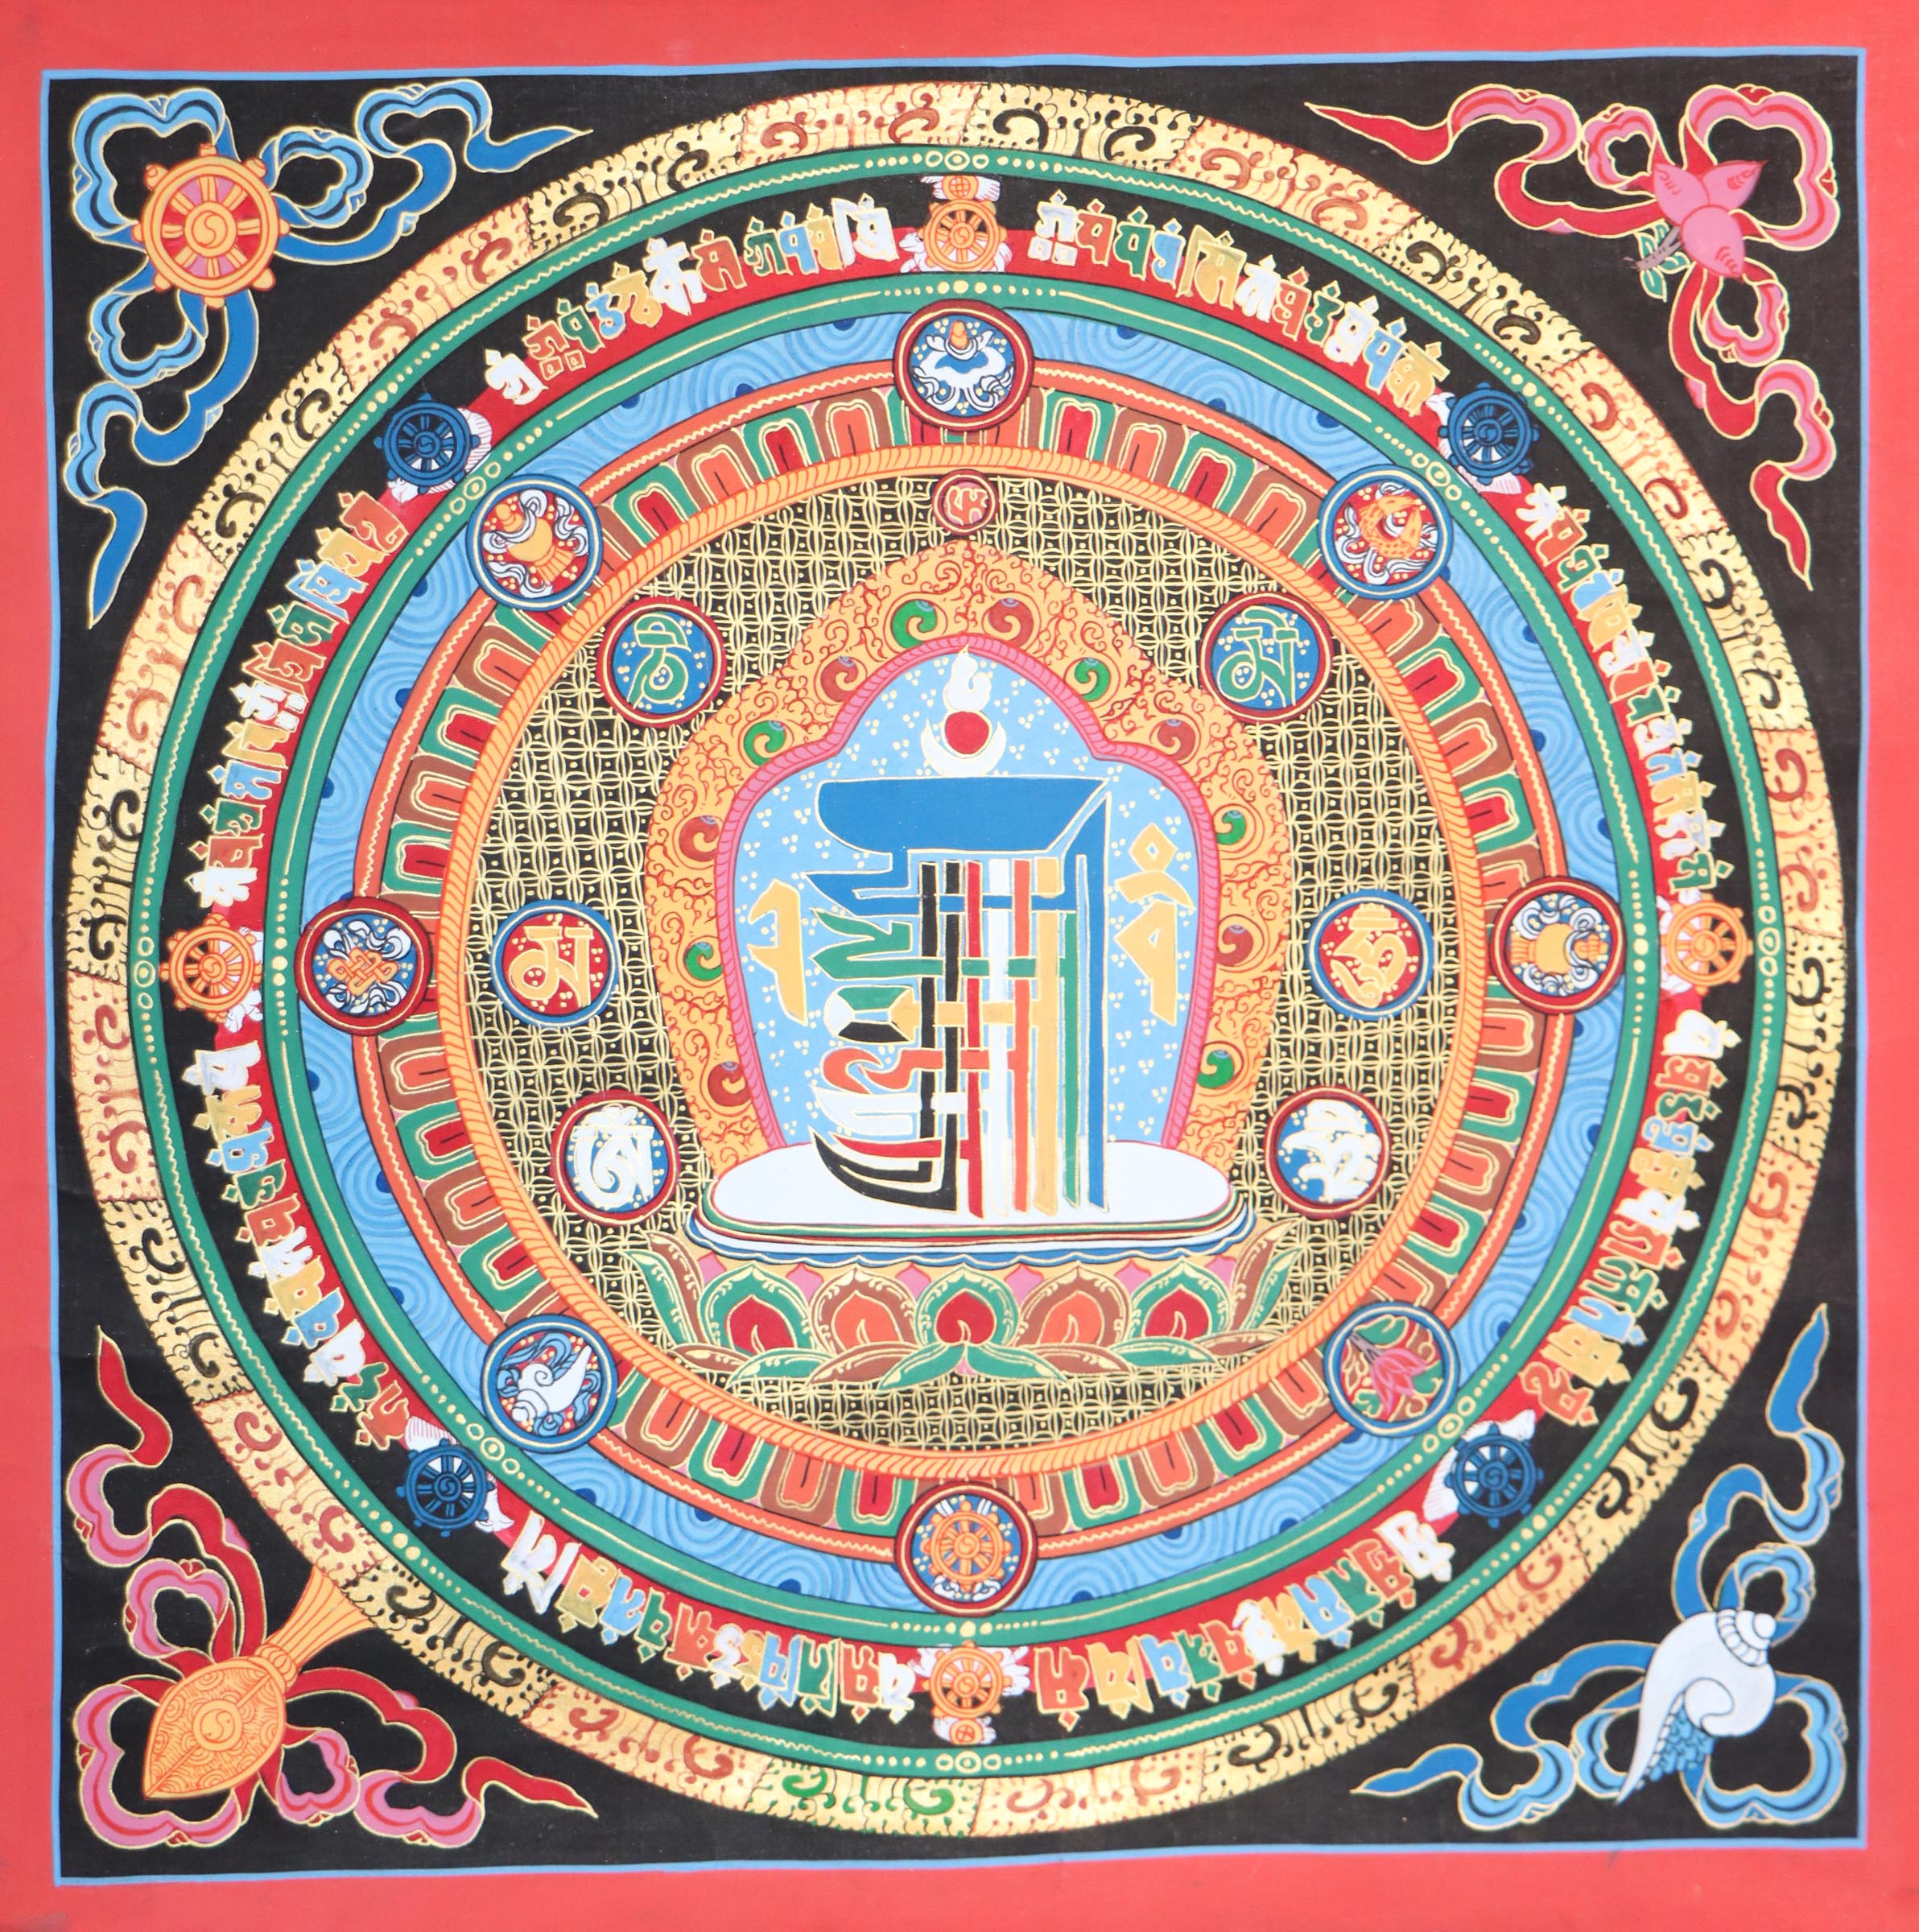 Kalchakra Mantra of 12 syllables Thangka Painting on canvas 